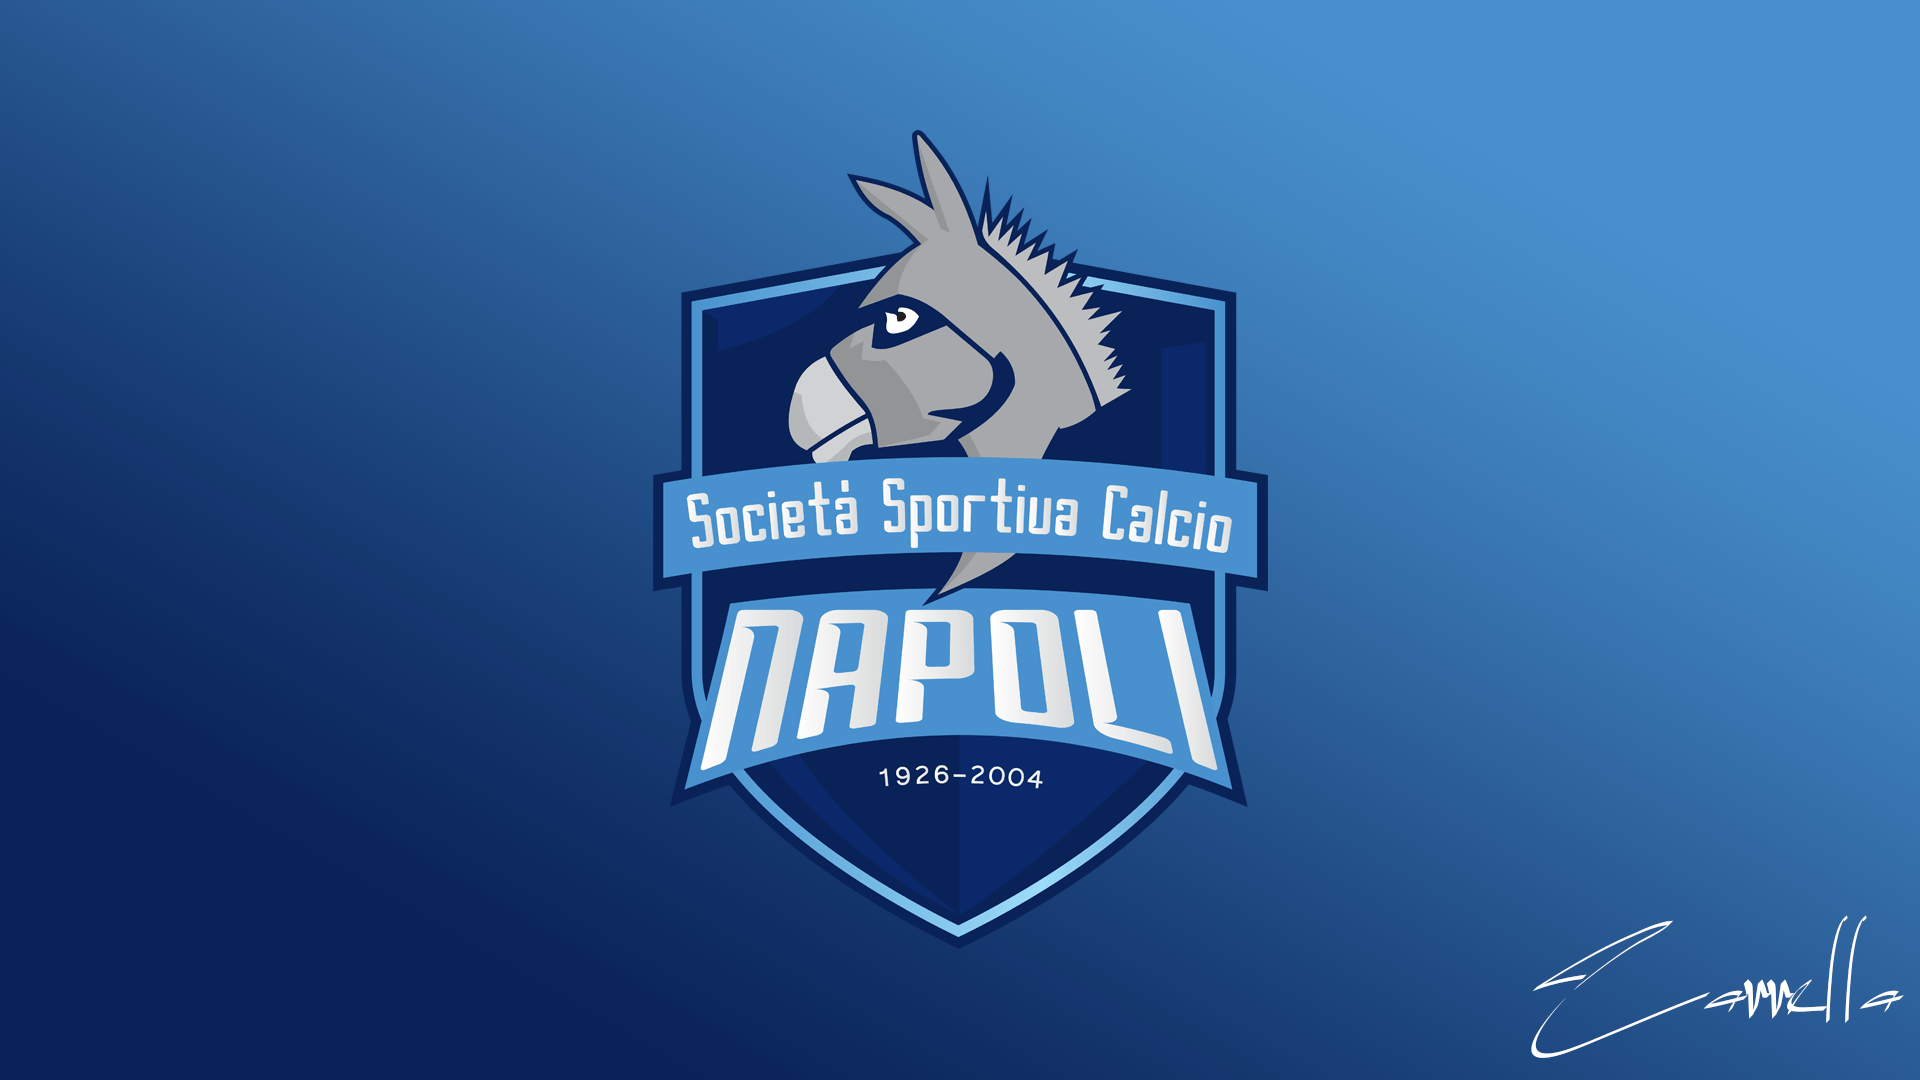 Napoli Logo - New Napoli logo idea 2 [NBA Style] : sscnapoli